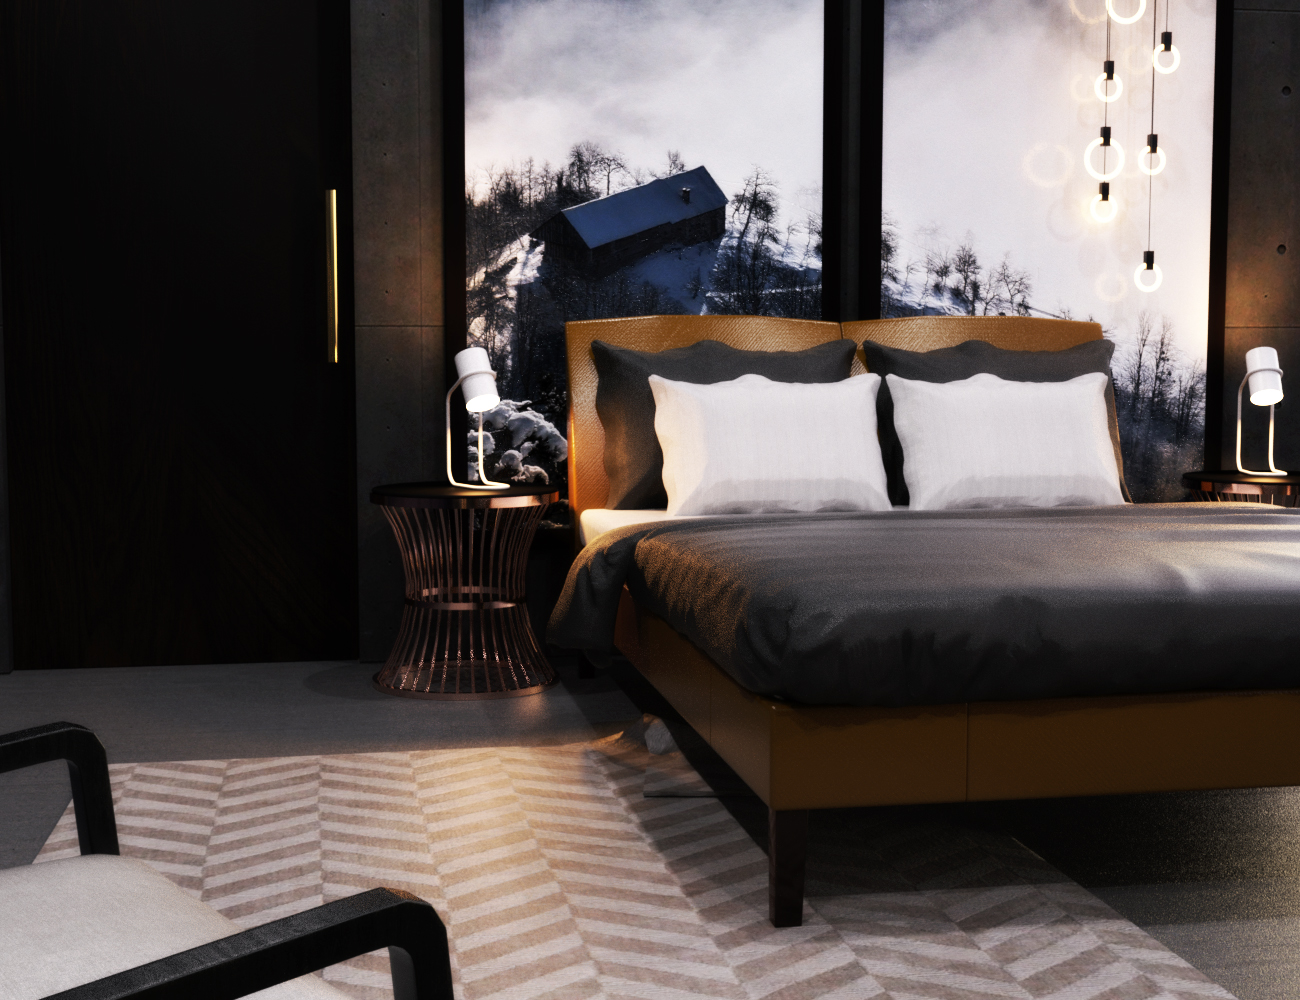 Stylish Bedroom by: Modu8, 3D Models by Daz 3D